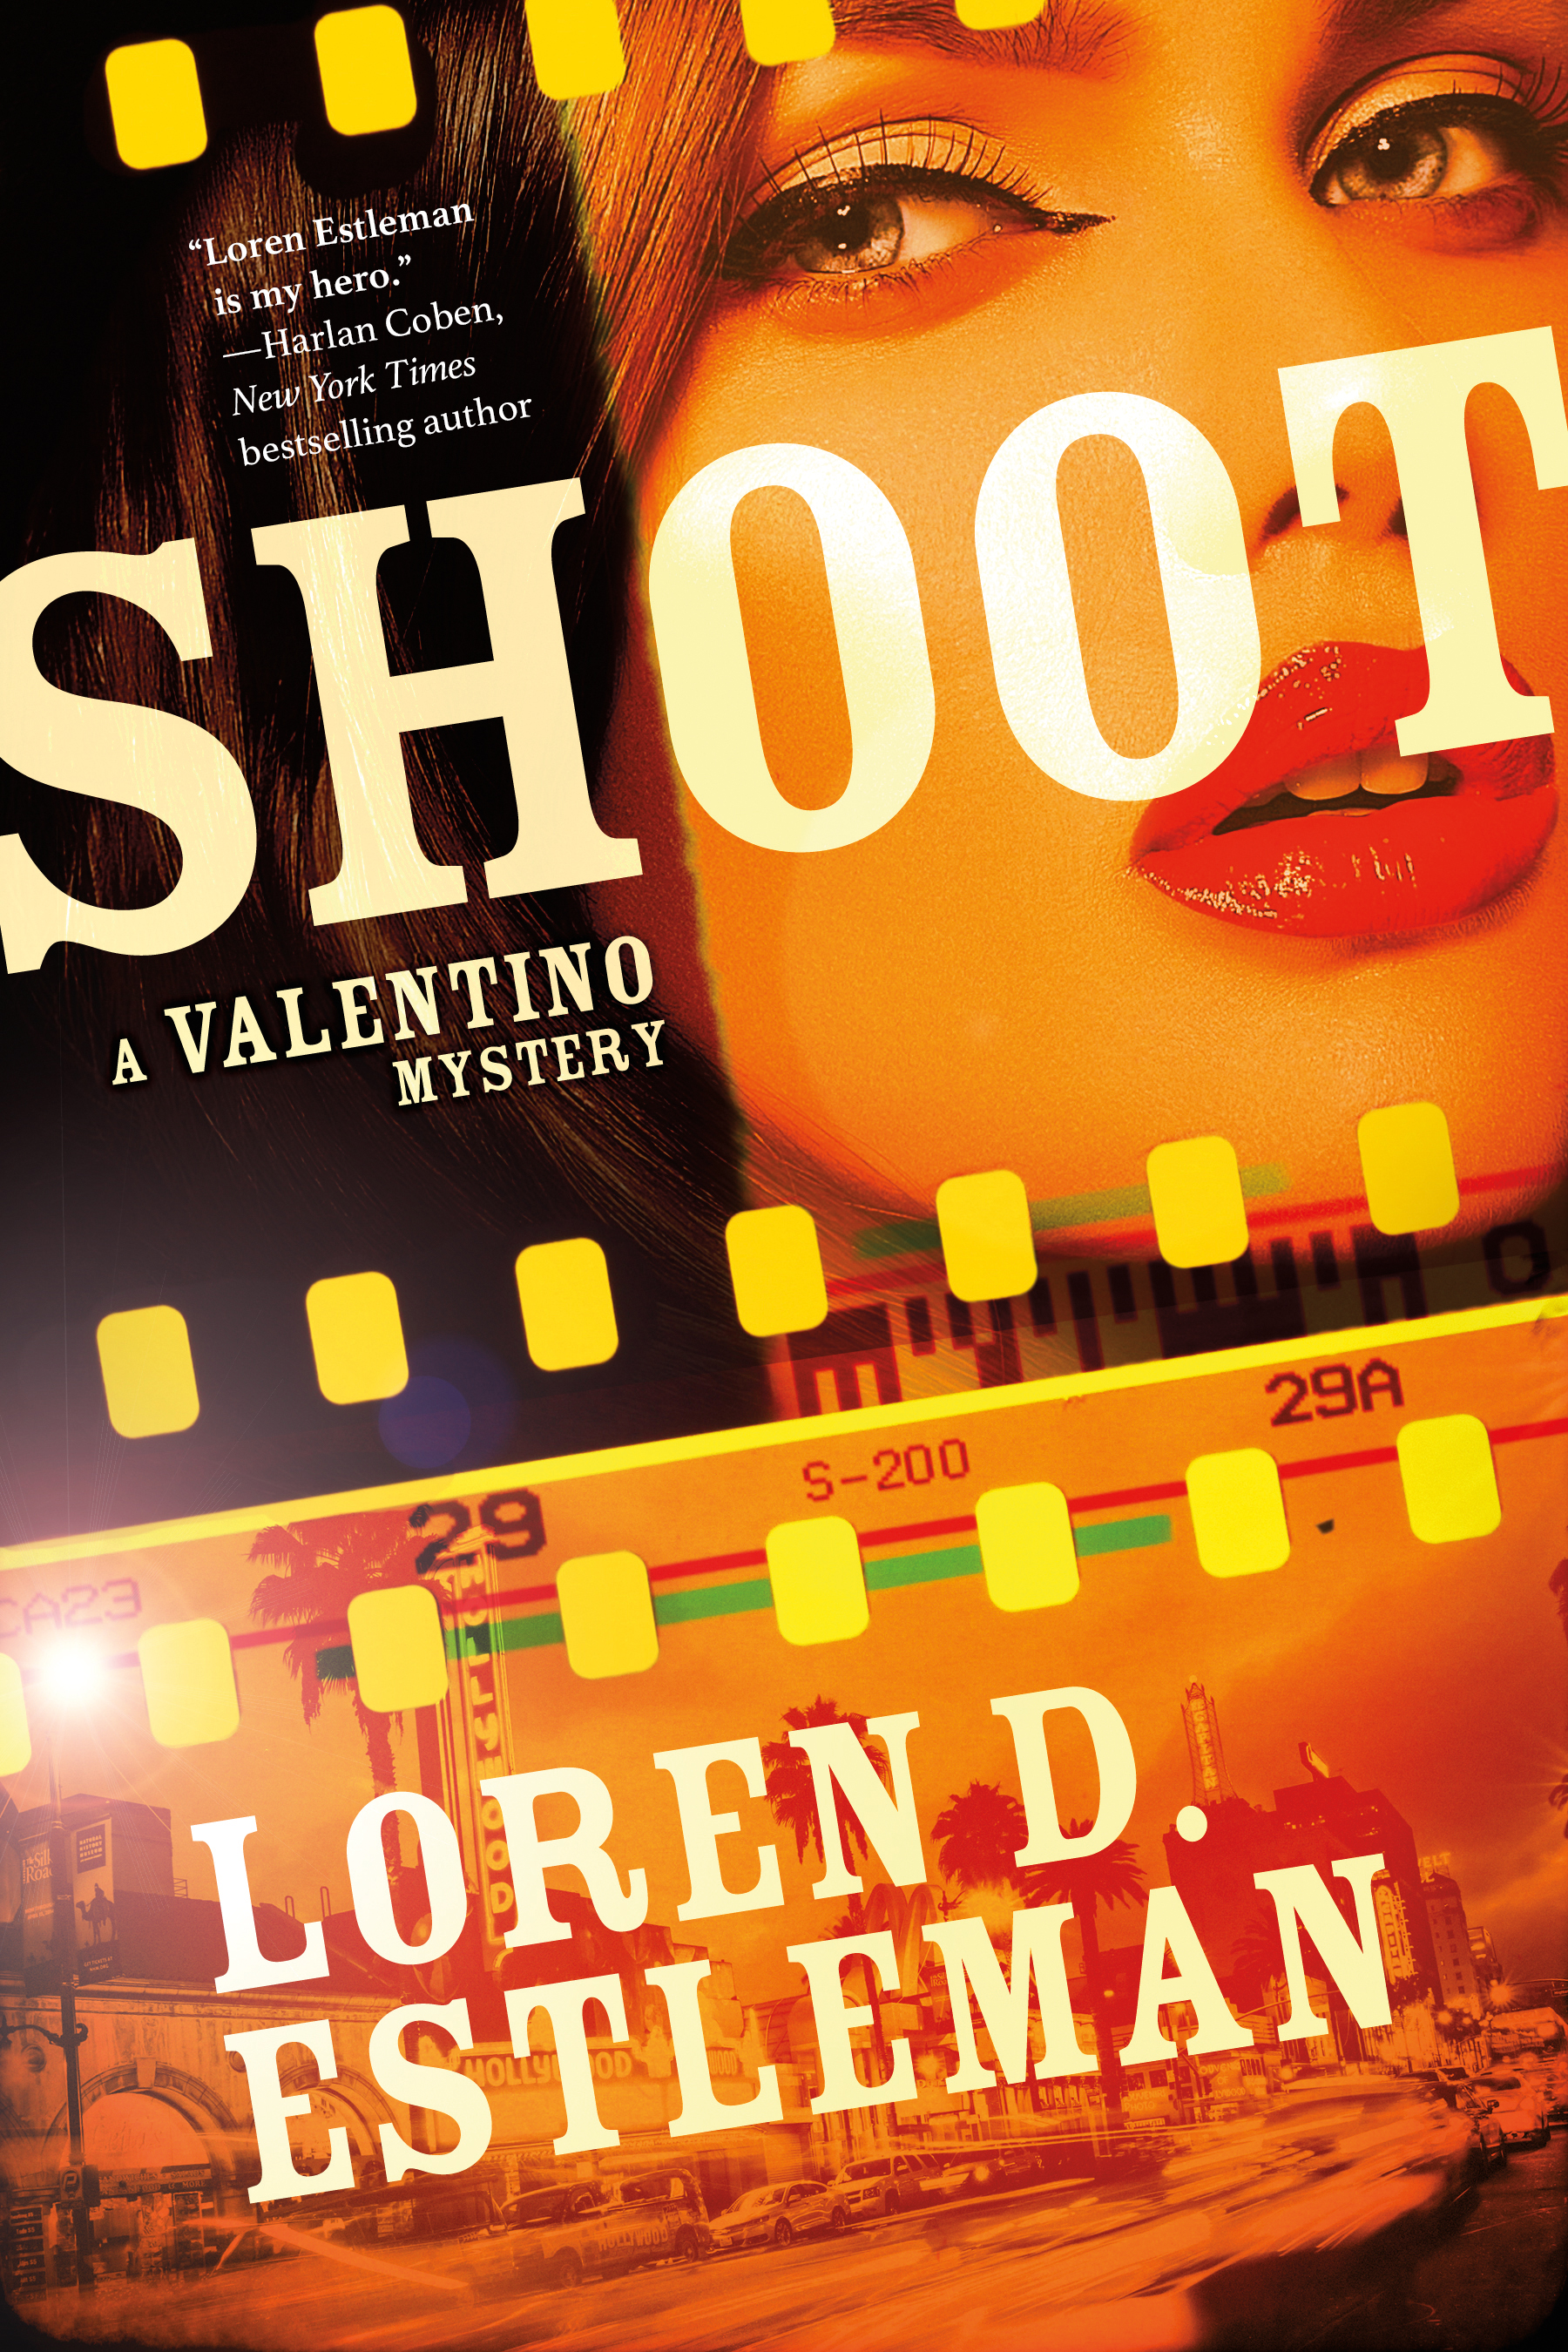 Shoot : A Valentino Mystery by Loren D. Estleman